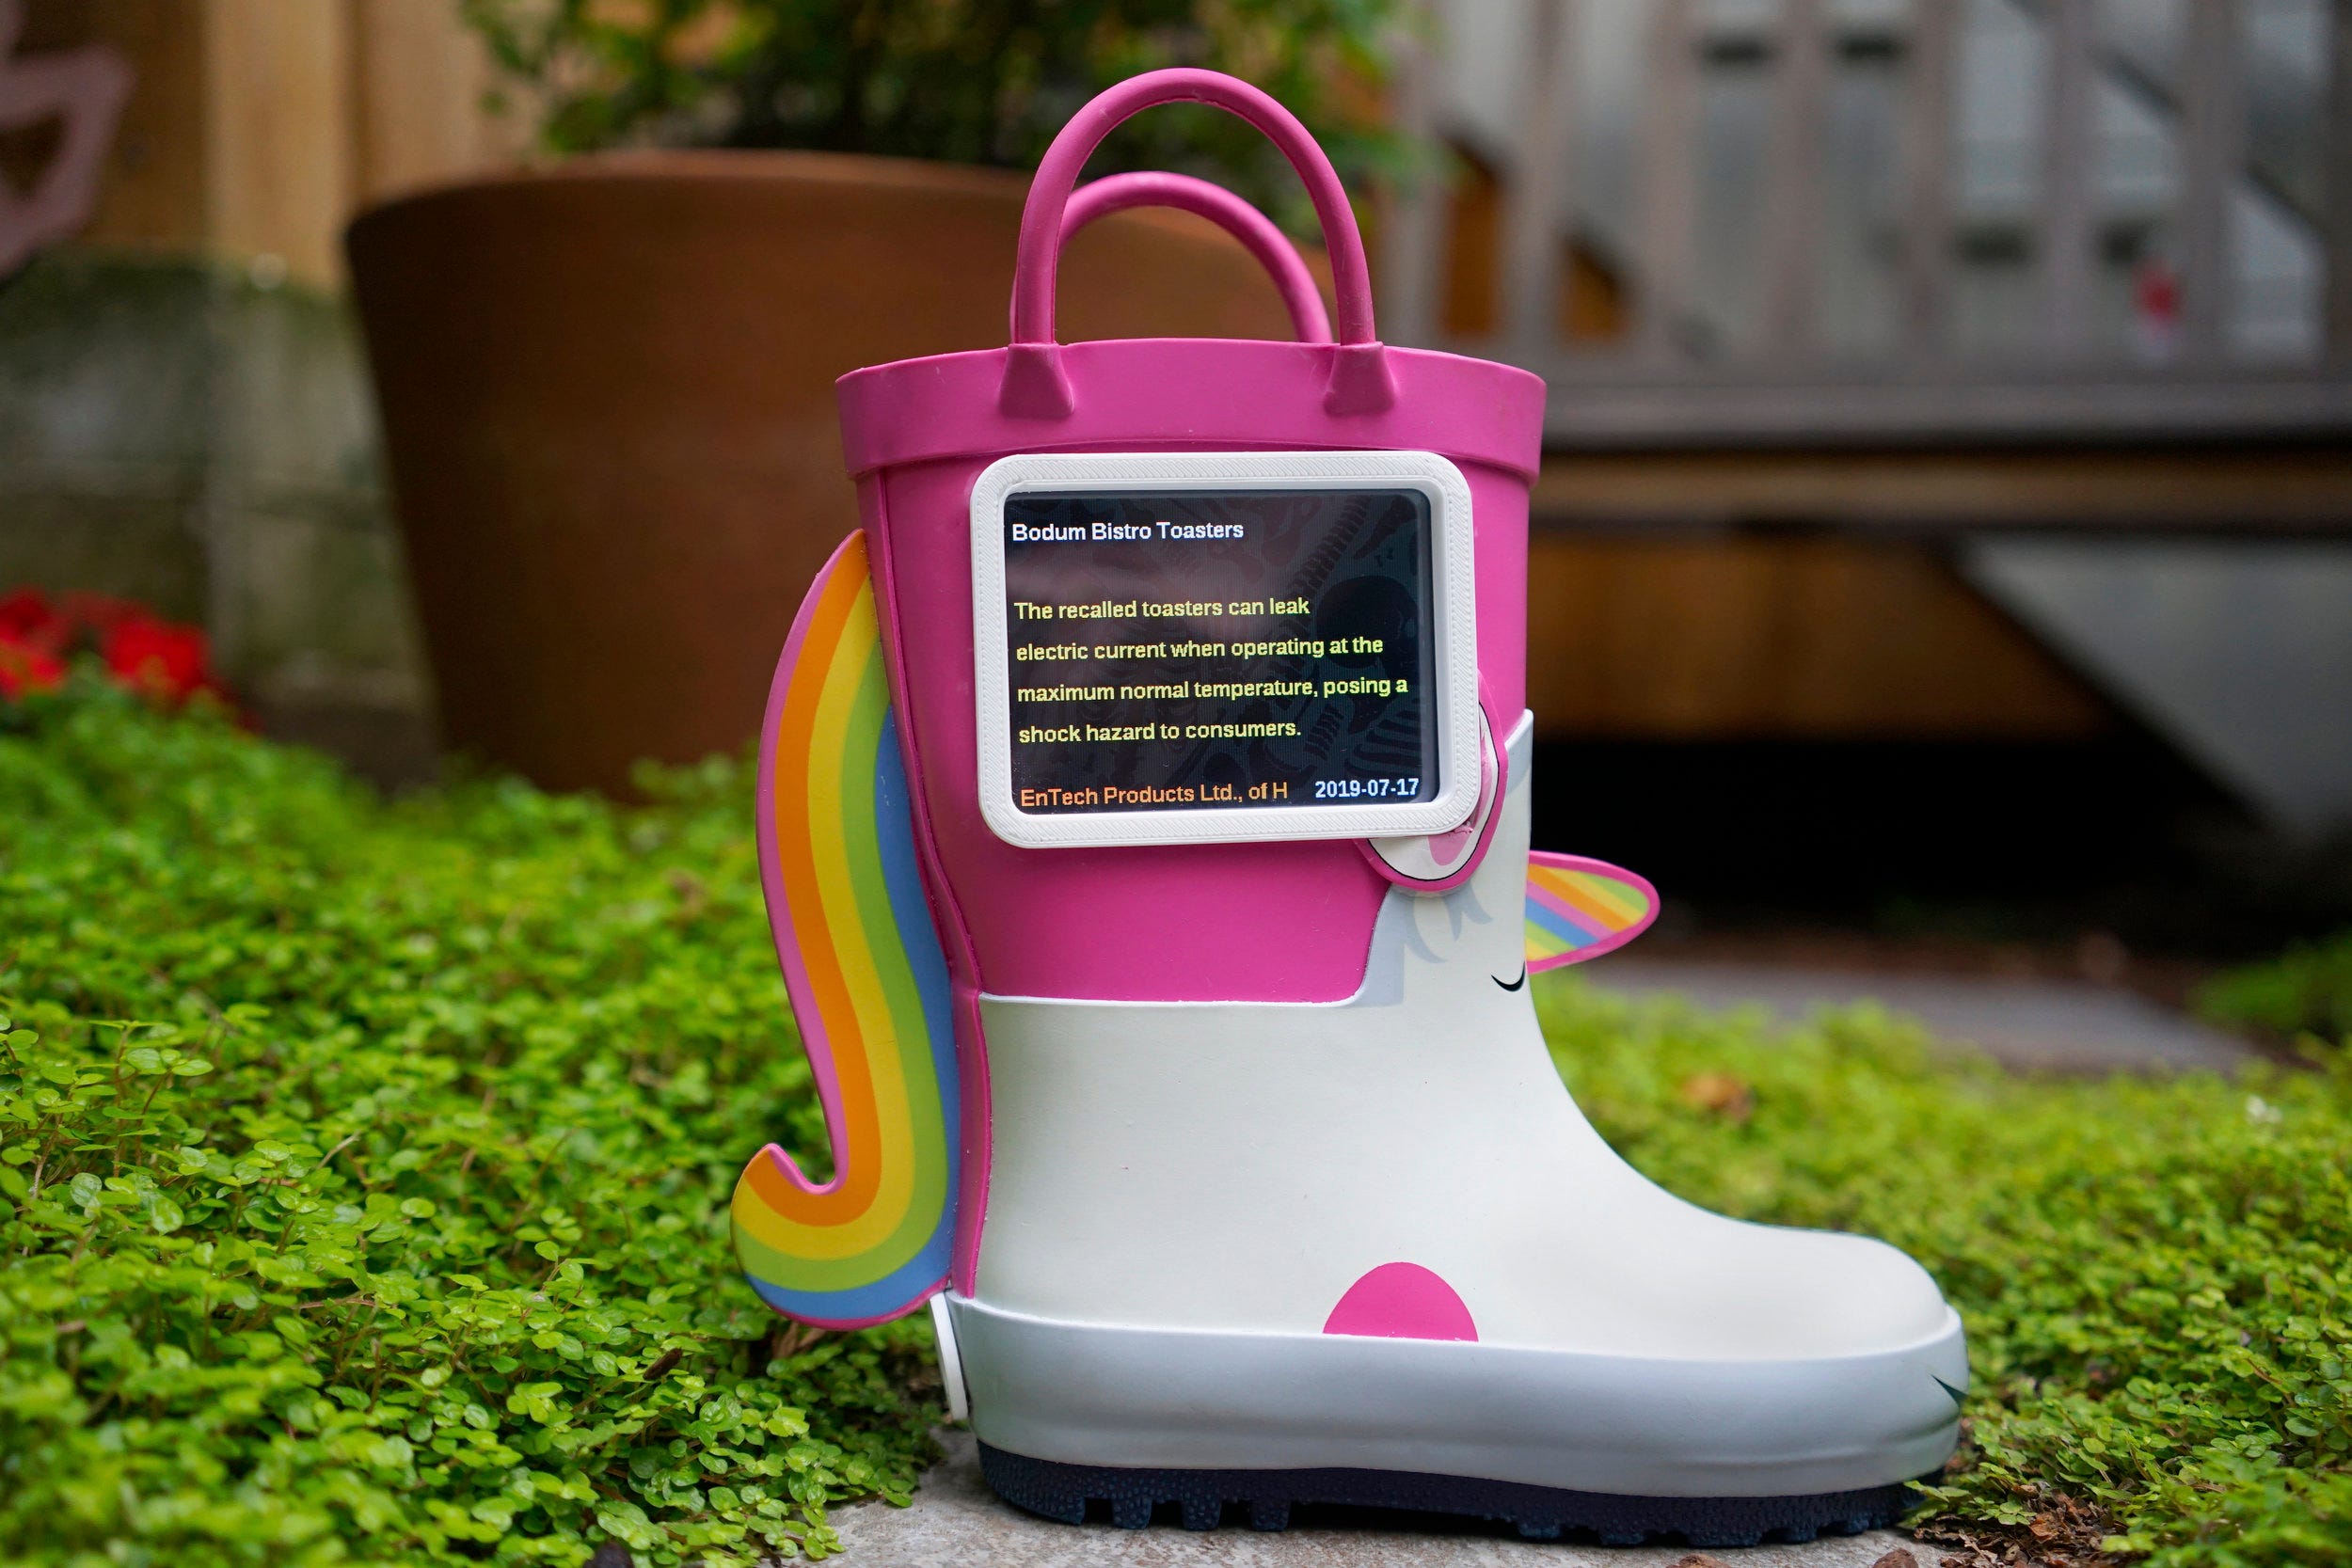 Web-Enabled Unicorn Boots Warn You of 